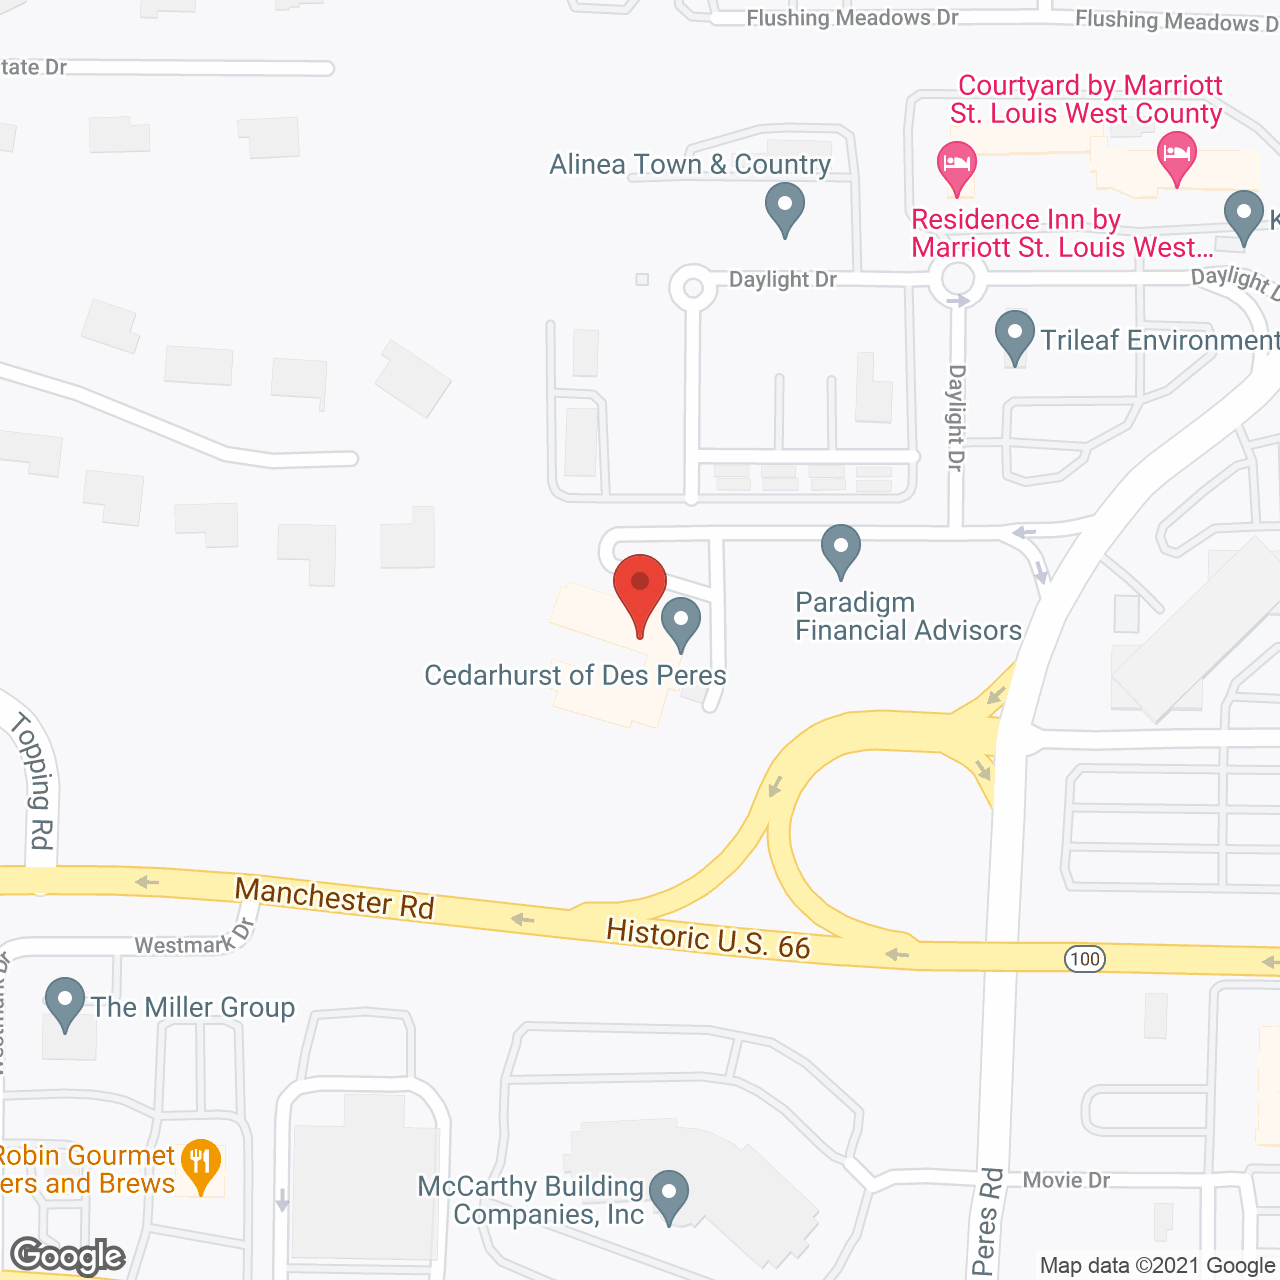 Cedarhurst of Des Peres in google map